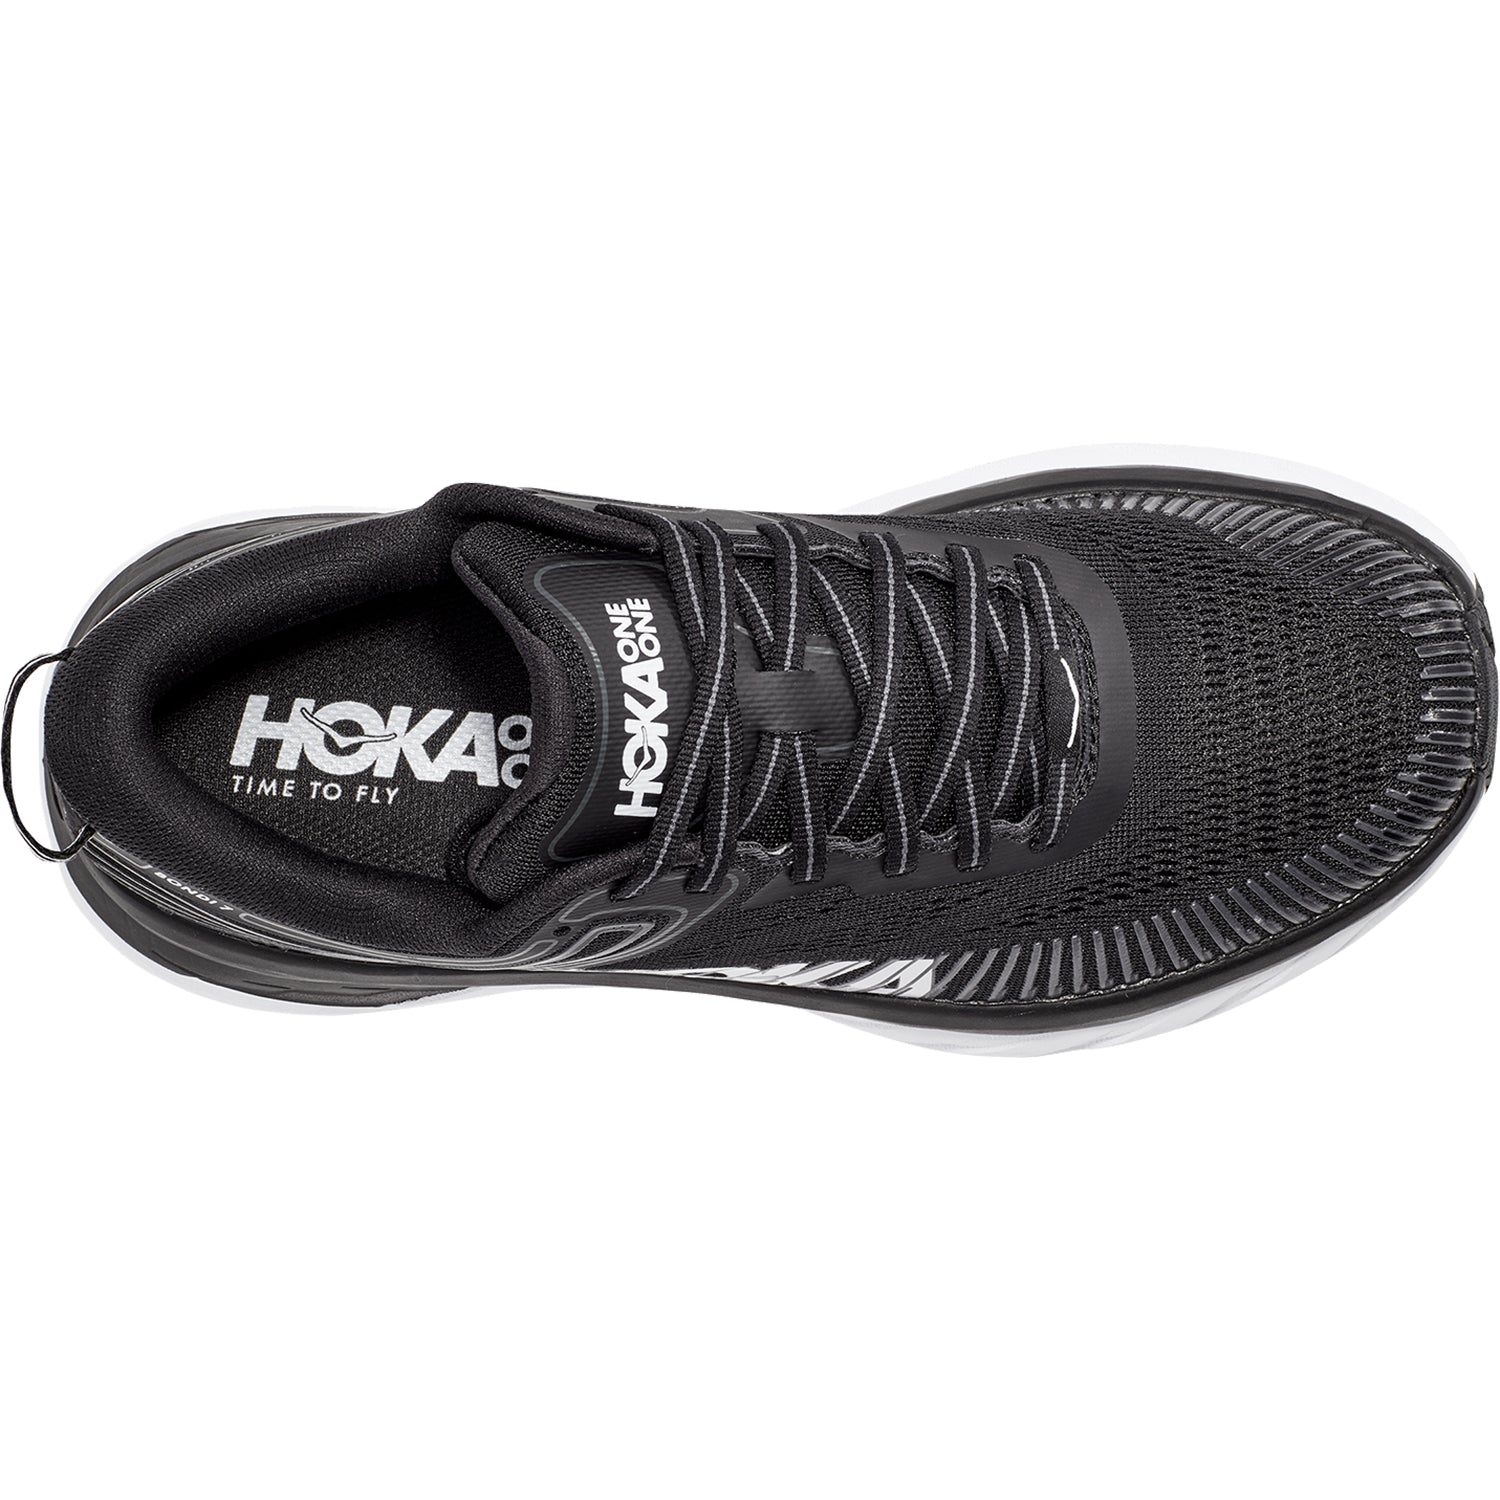 Hoka Bondi 7 Black/White | Road Running Shoes | Footwear etc.